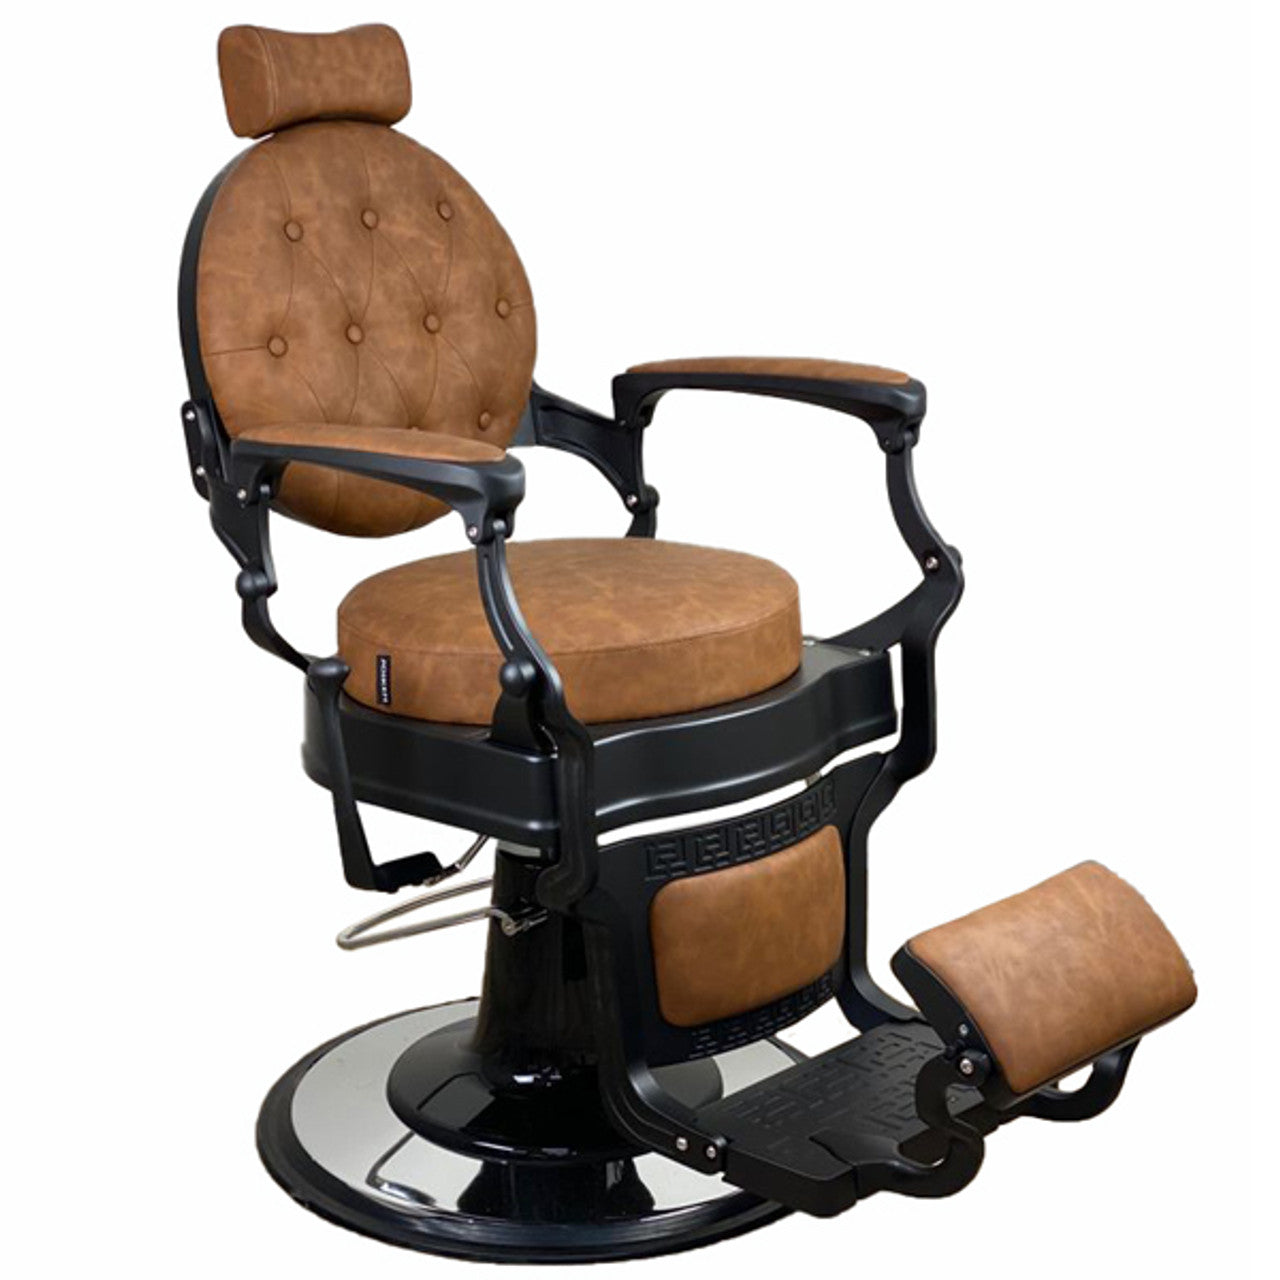 Joiken Harlem Barber Chair - Tan